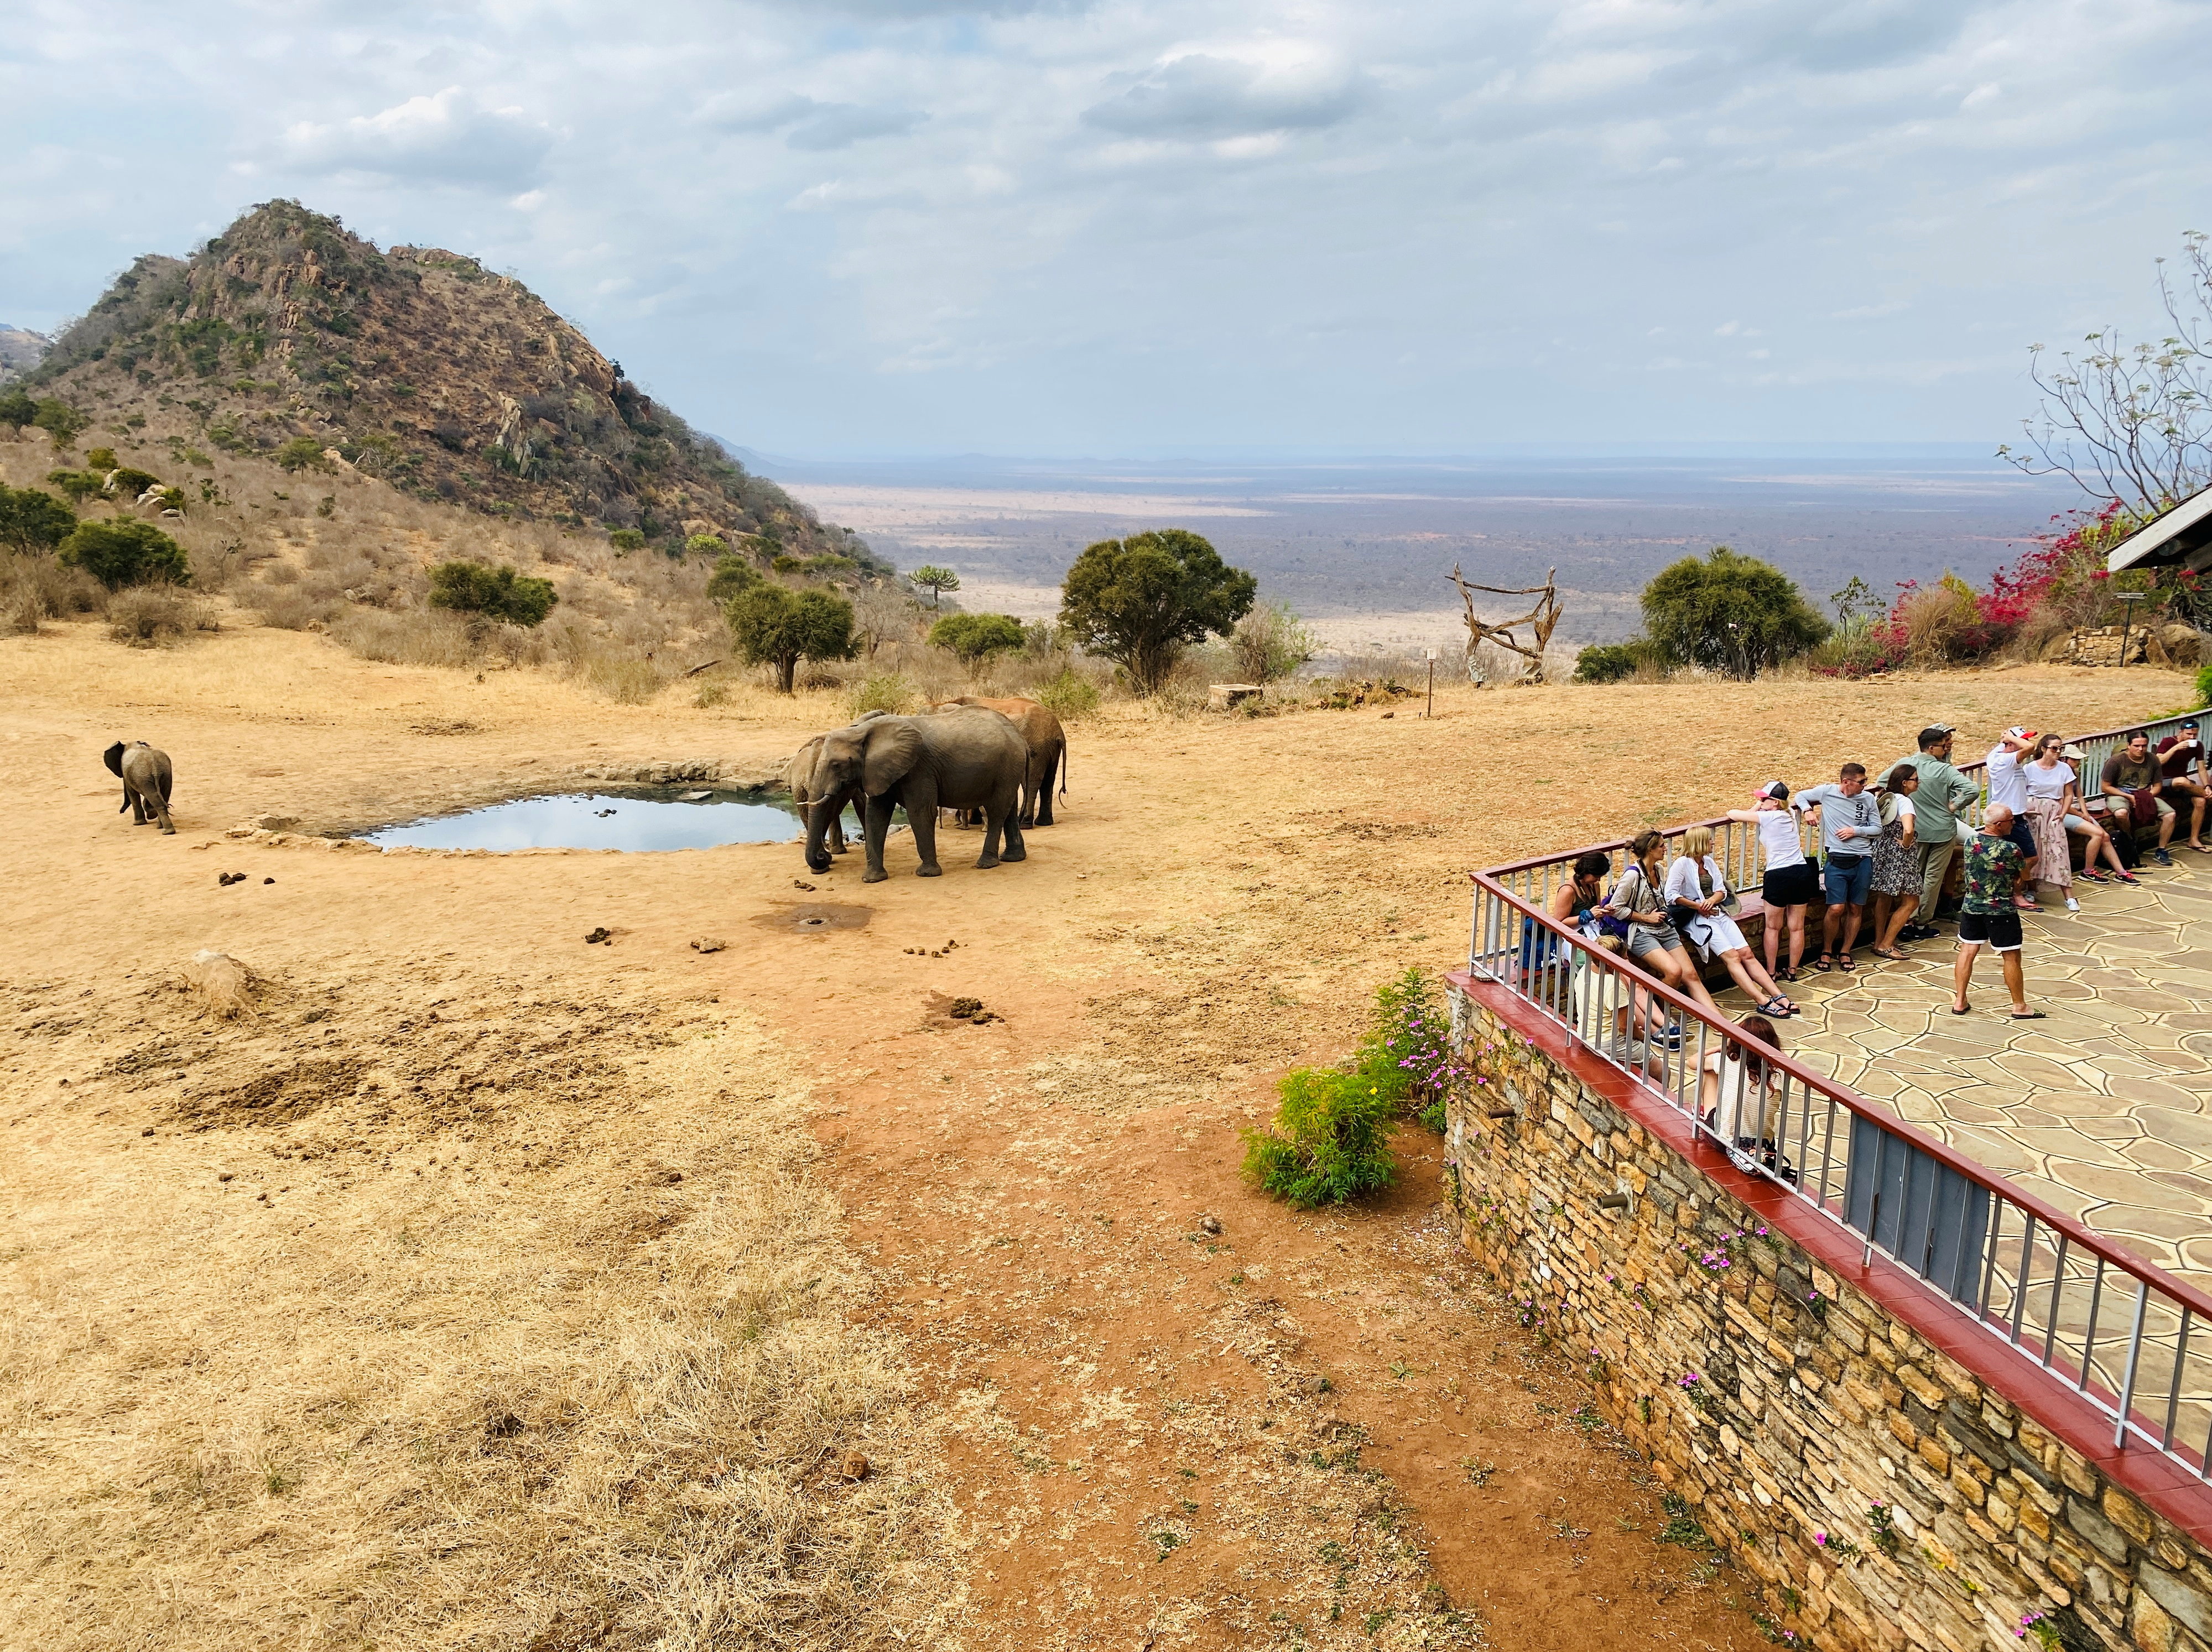 Elephants are seen as tourists visit Tsavo West National Park